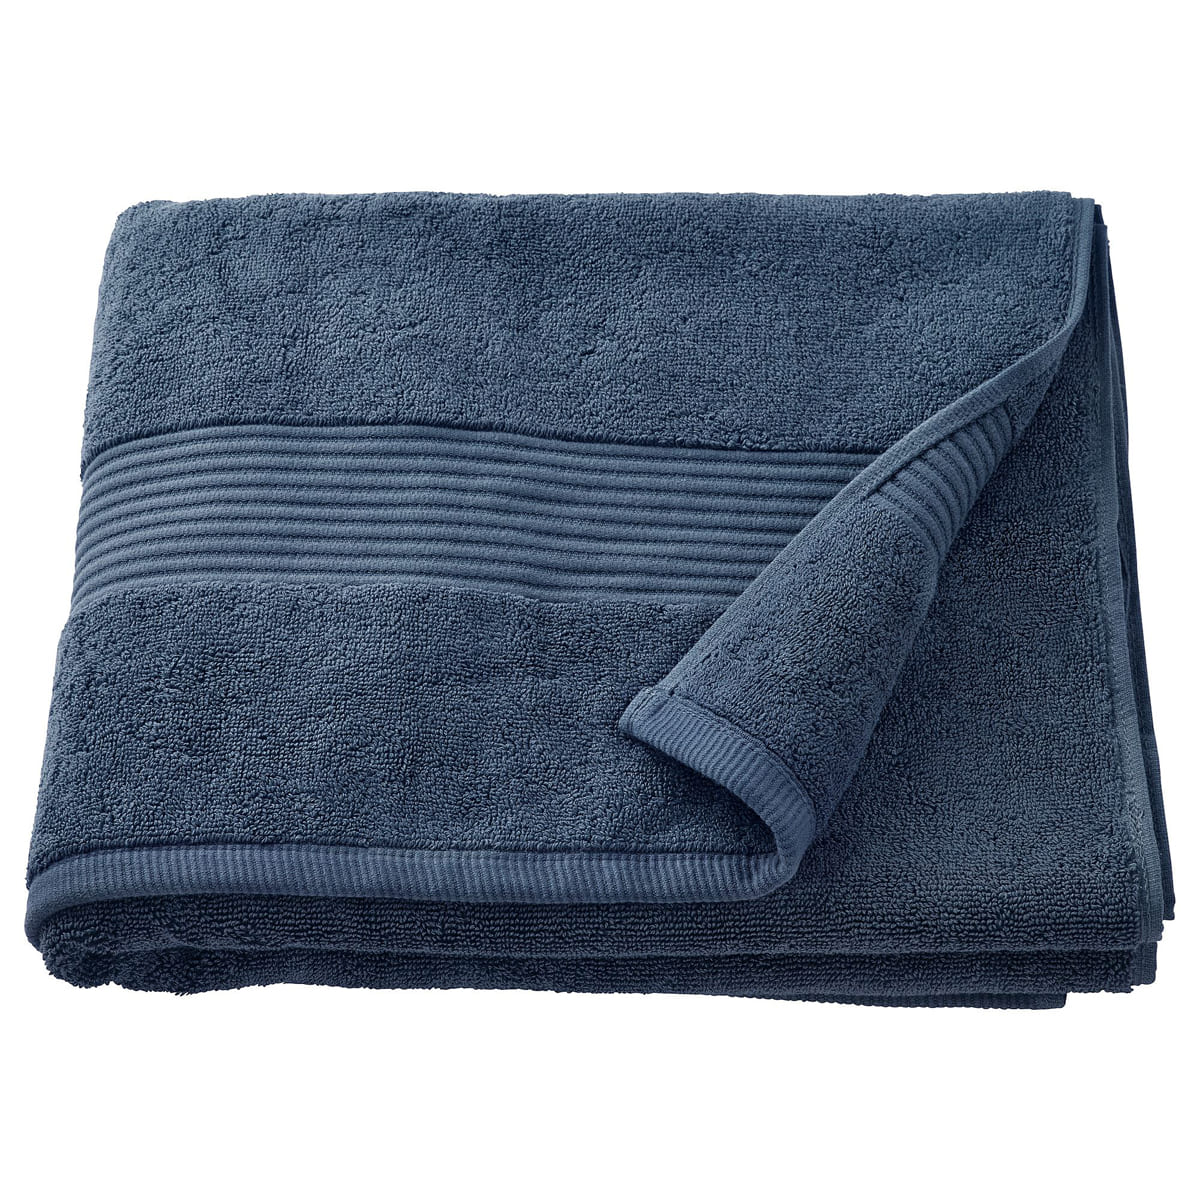 Полотенце банное Ikea Fredriksjon 70x140 см, темно-синий одноразовое полотенце для лица q1qd косметическое полотенце для чувствительной кожи очень толстое мягкое полотенце s с сумкой на шнурке инс